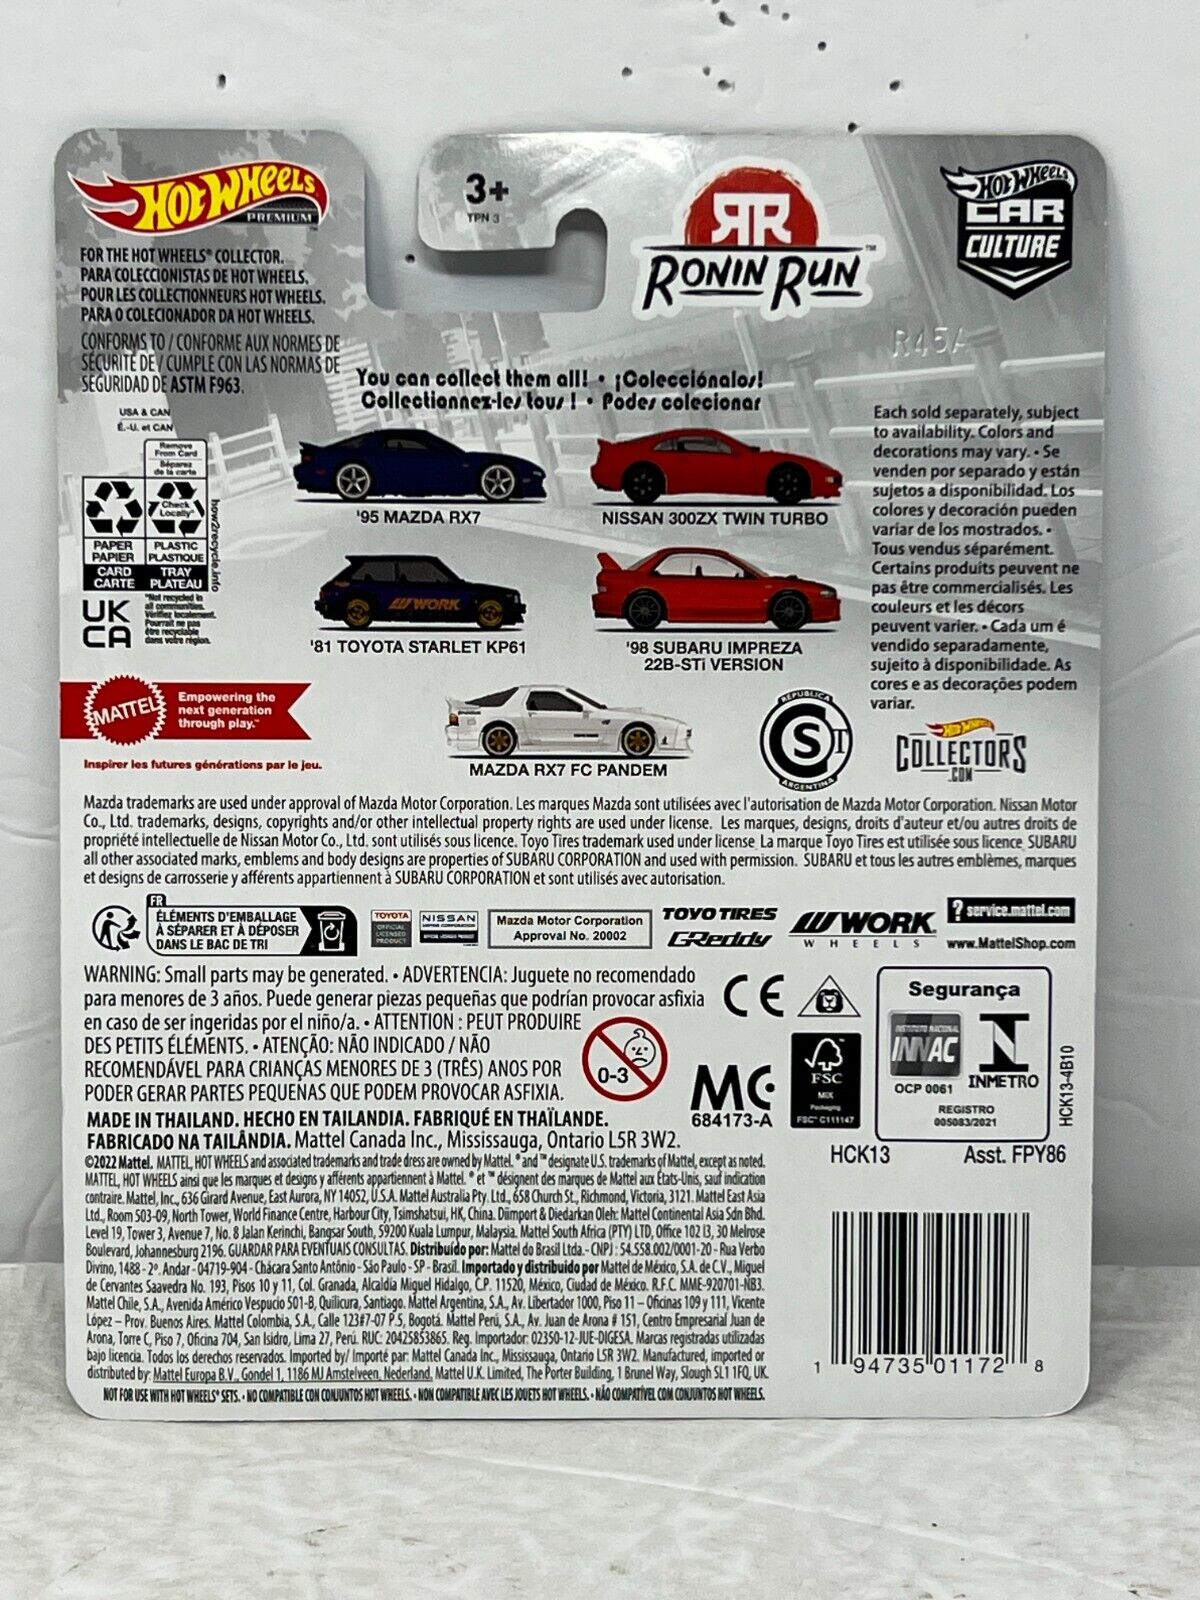 Hot Wheels Premium Ronin Run '95 Mazda RX7 1:64 Diecast